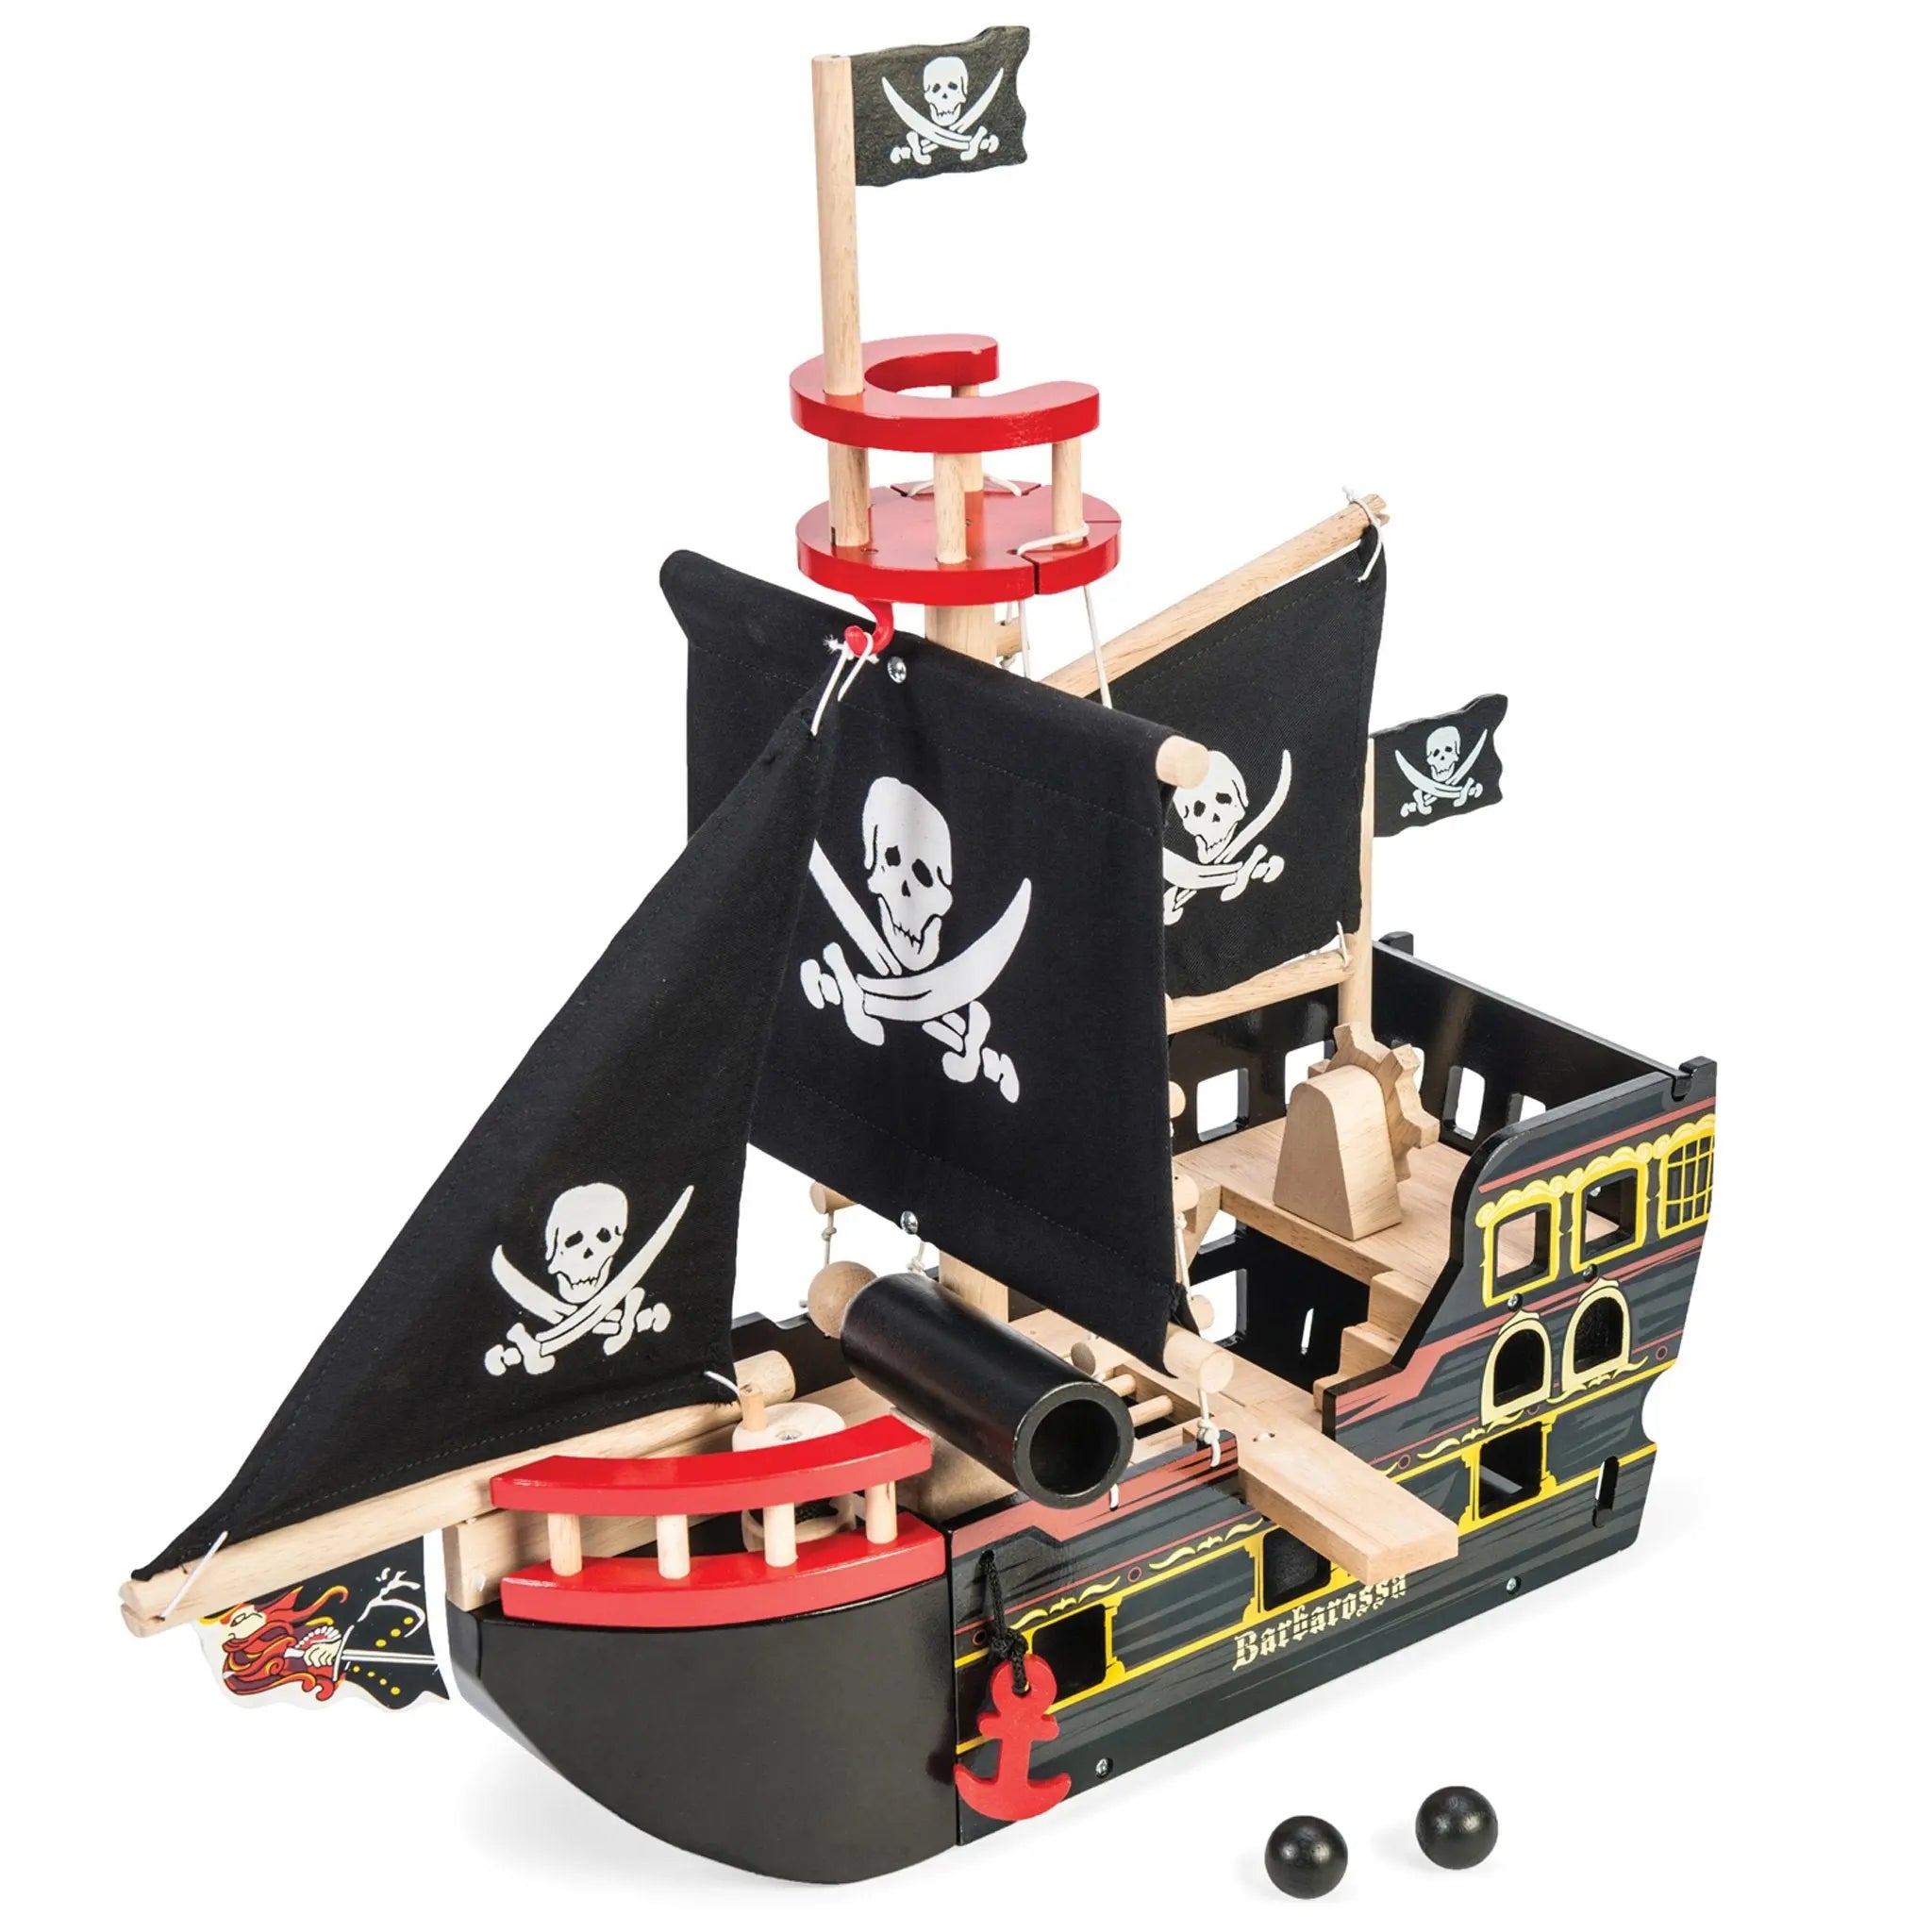 Barbarossa Toy Pirate Ship-Wooden toys & more-Le Toy Van-Blue Almonds-London-South Kensington